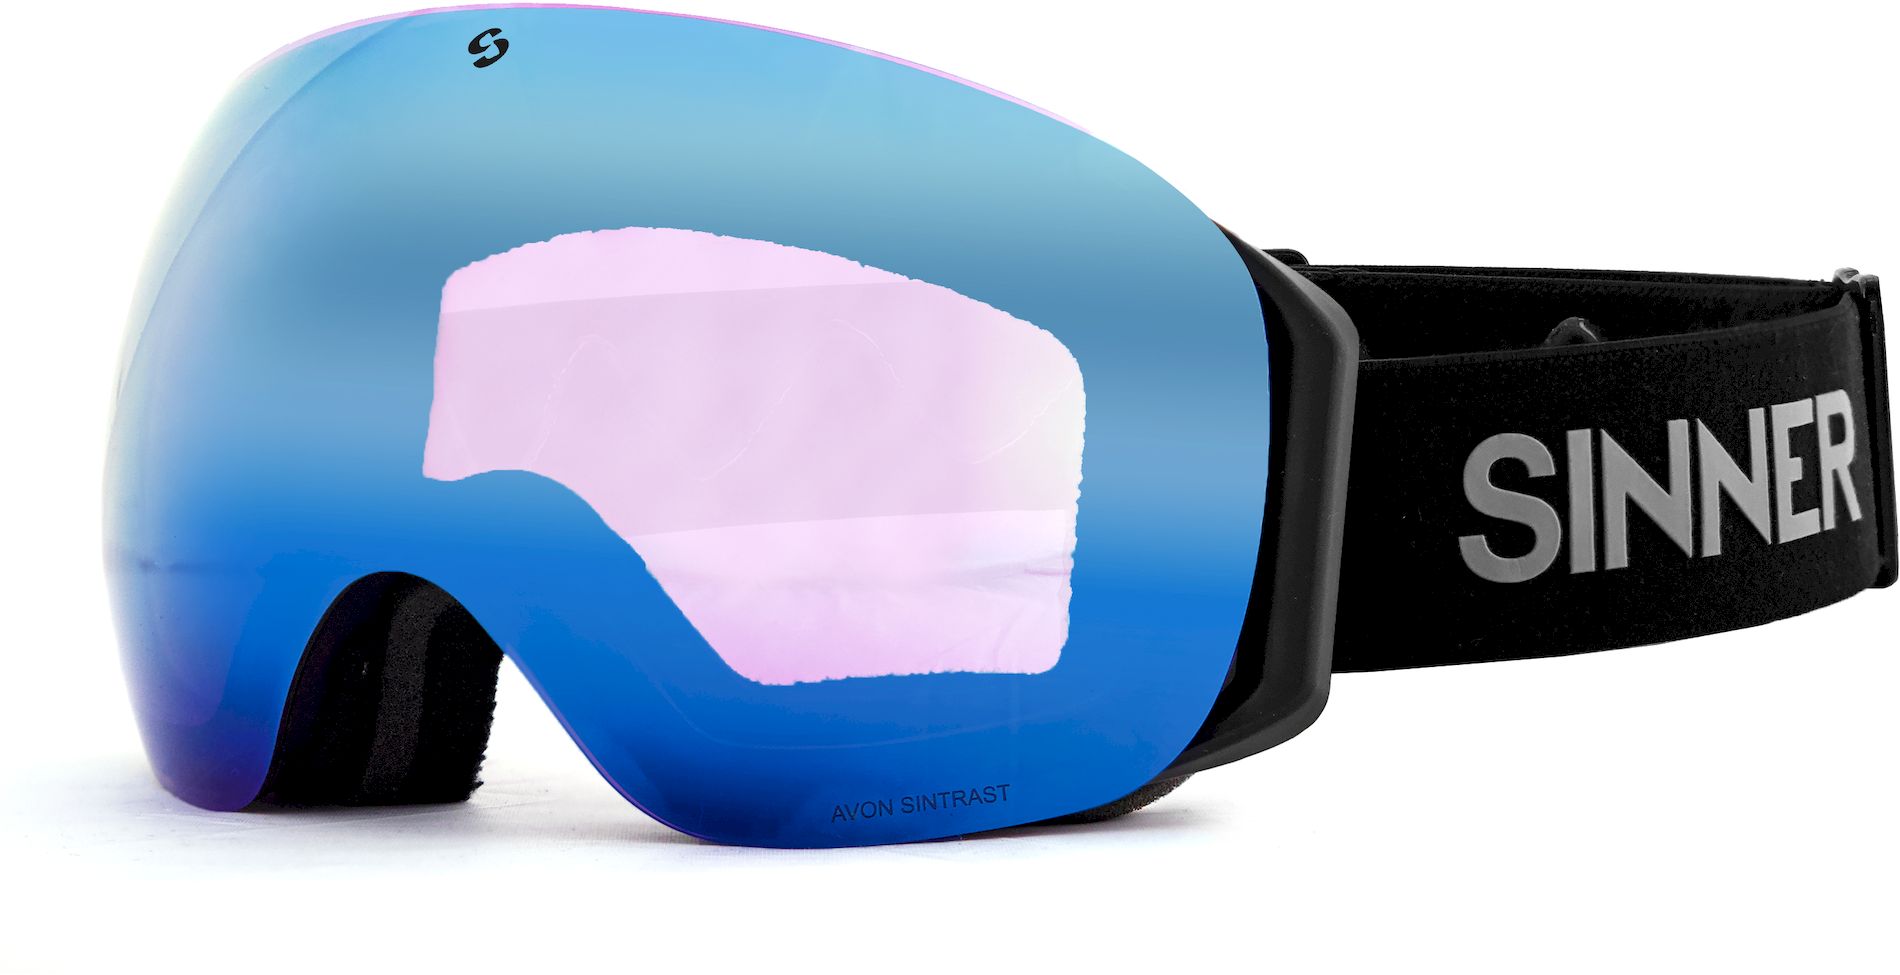 Sinner Avon skibril - Mat Zwart - Blauwe + Oranje lens